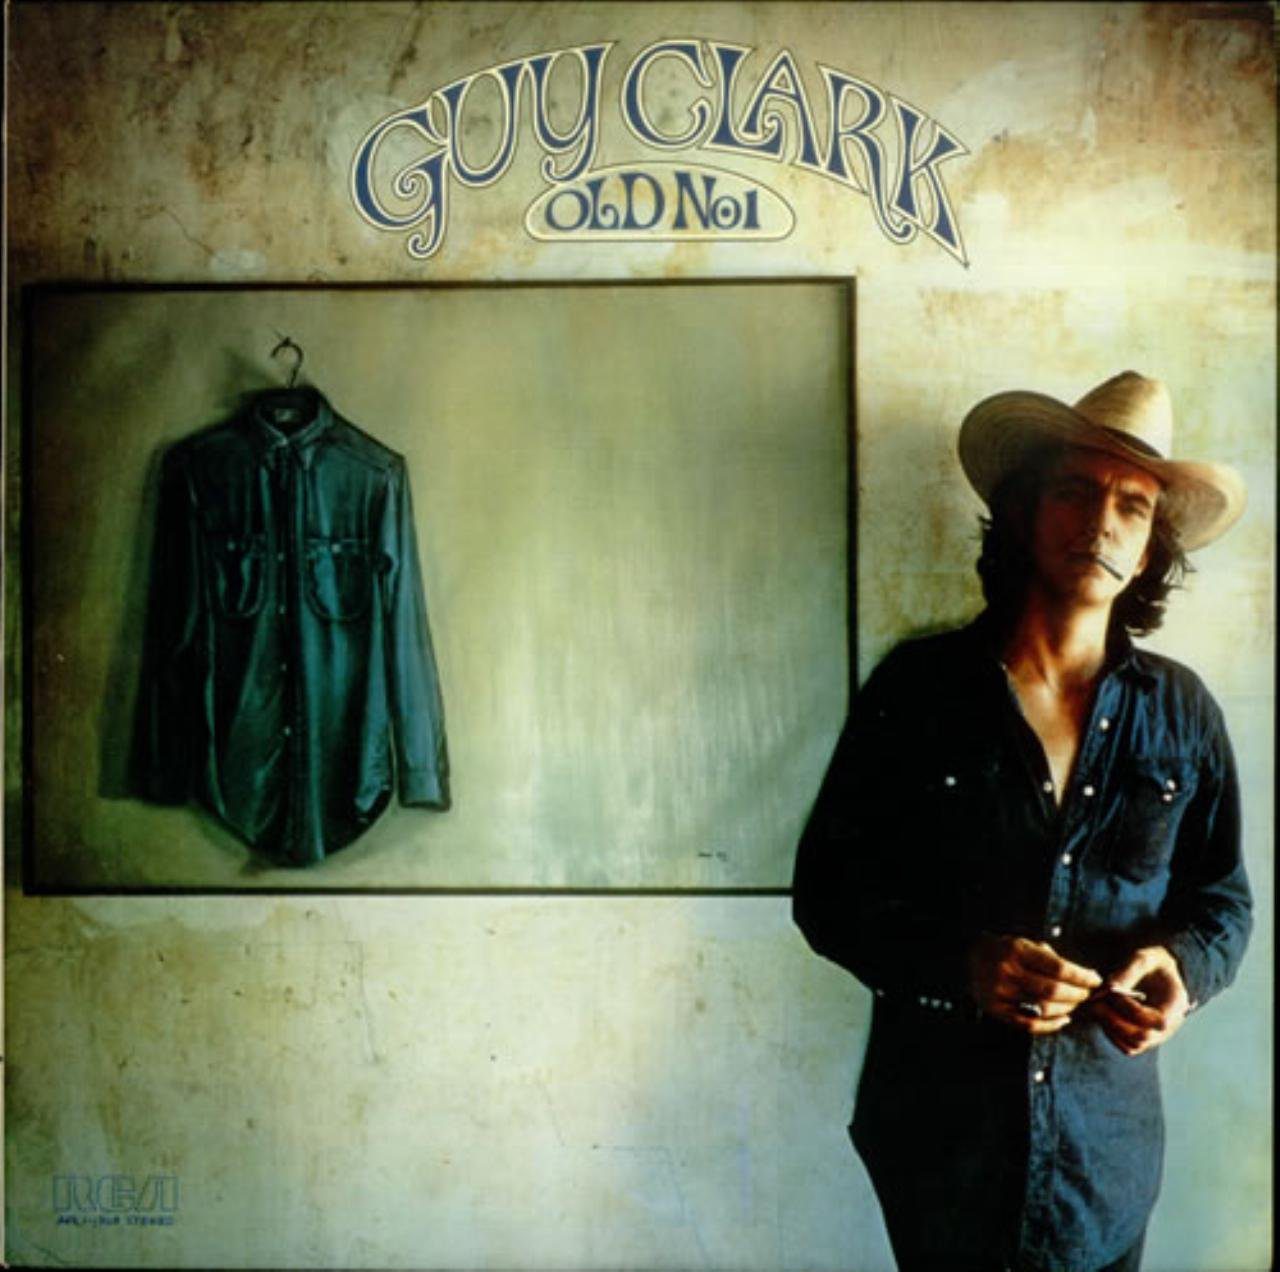 Guy Clark – Old No. 1 cover album